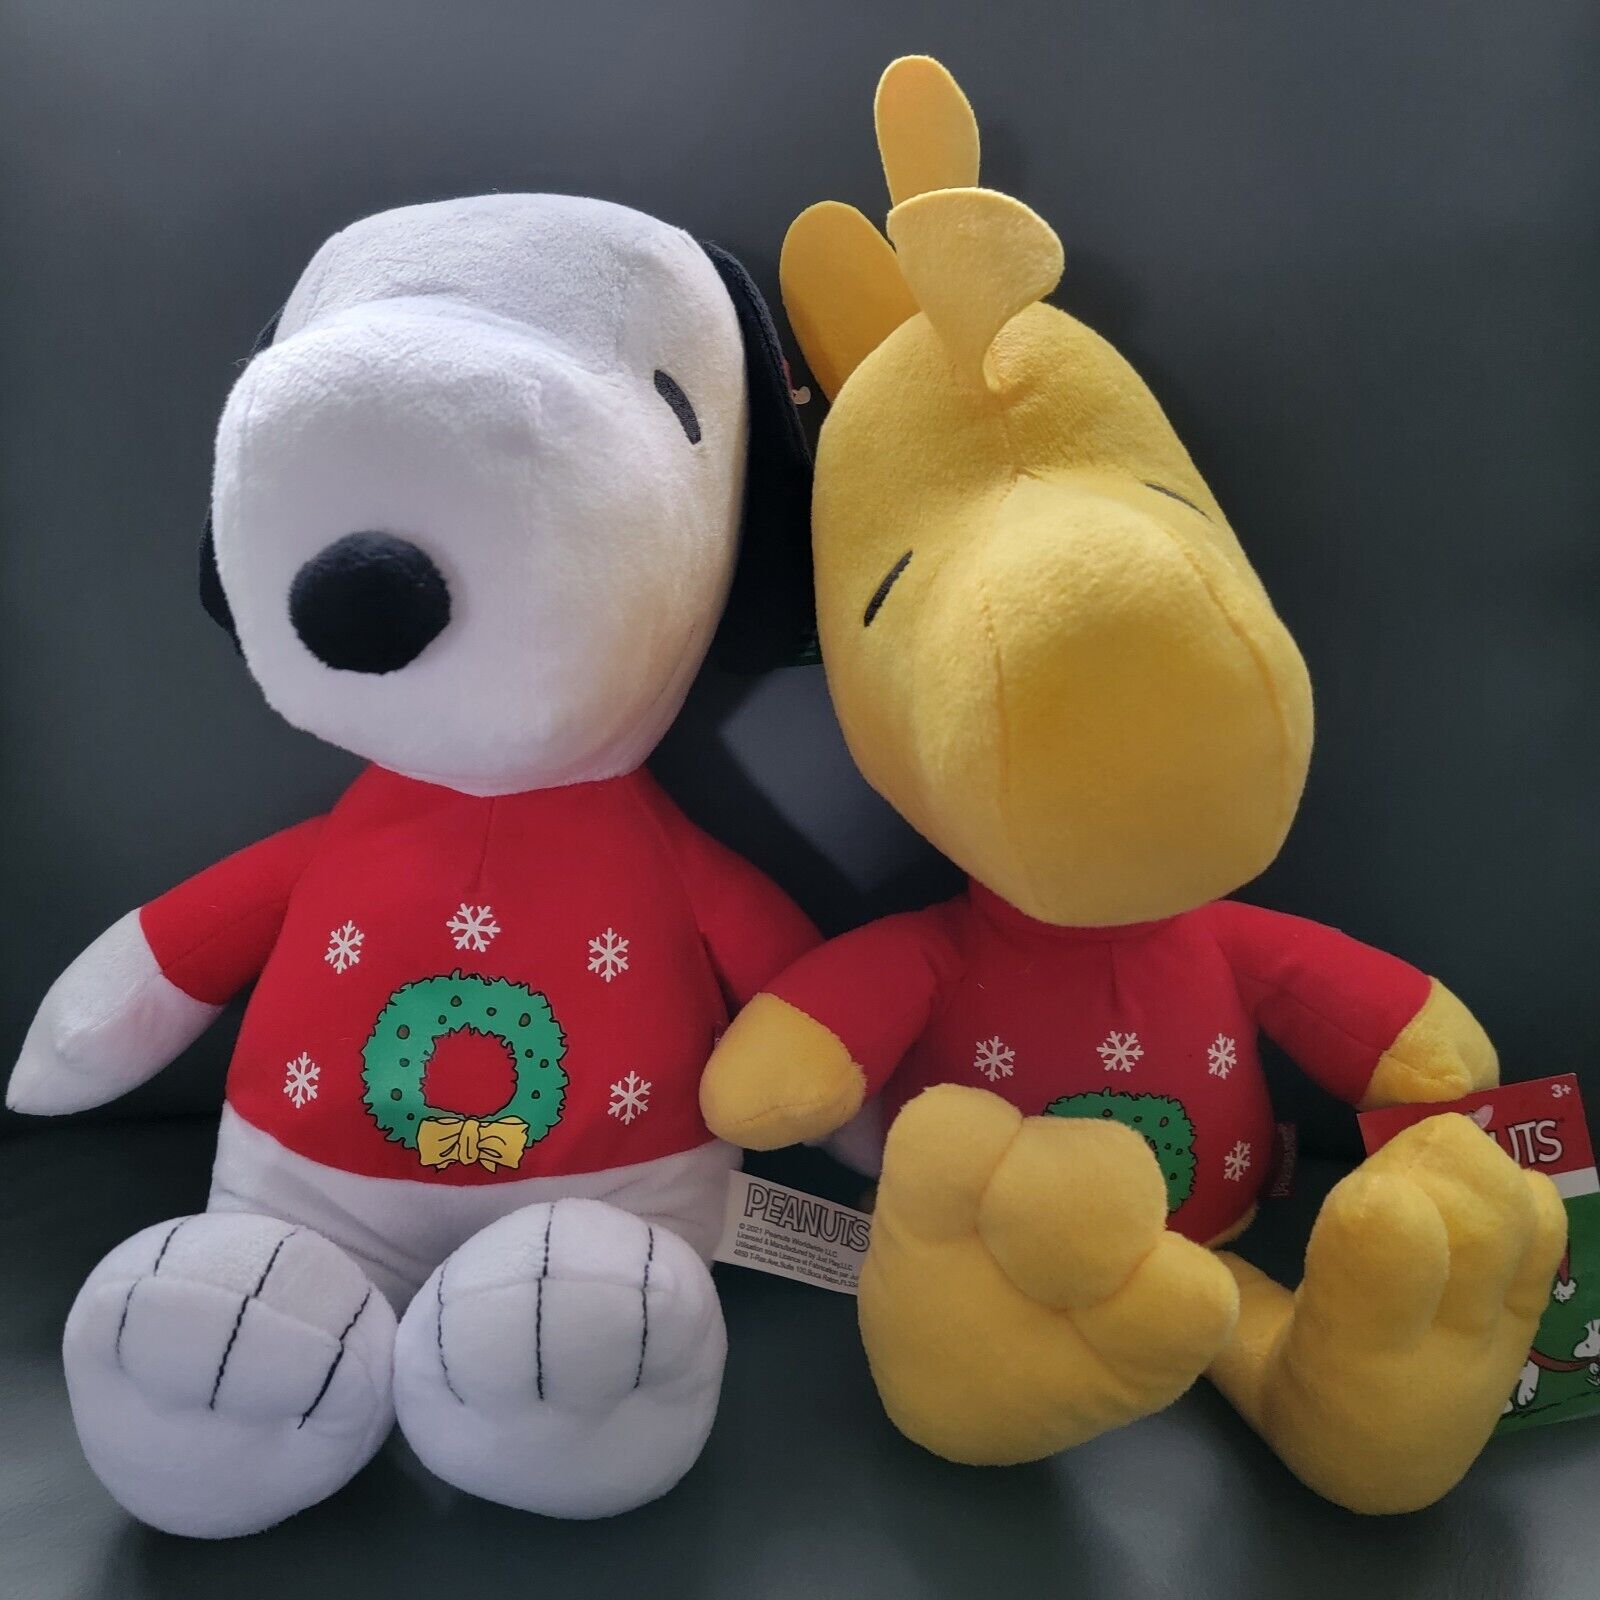 BNWT Peanuts Christmas Snoopy & Woodstock Stuffed Animal Pair